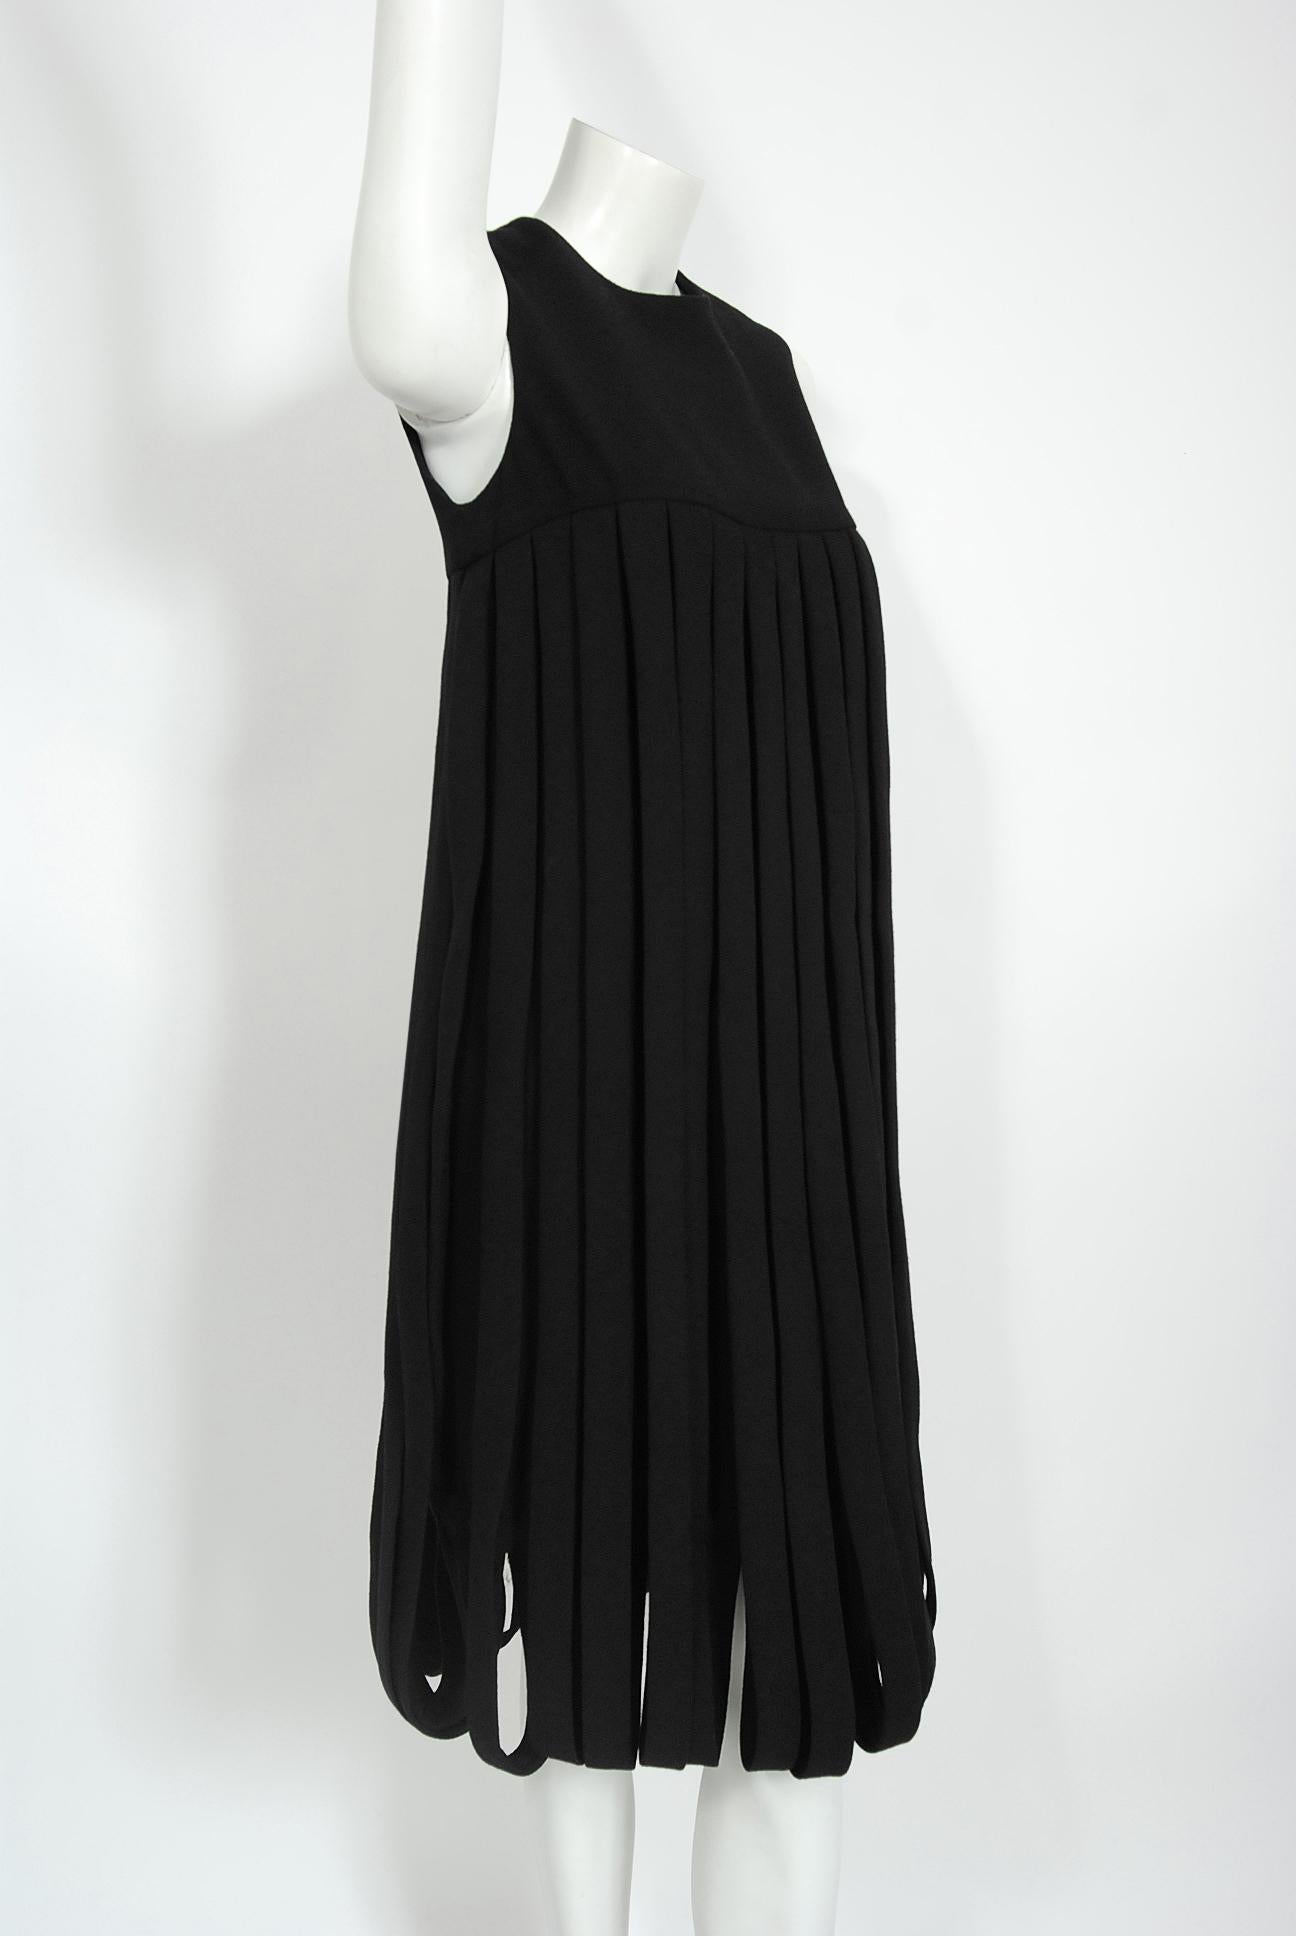 Women's Vintage 1967 Pierre Cardin Documented Black Wool Space-Age Mod Carwash Dress